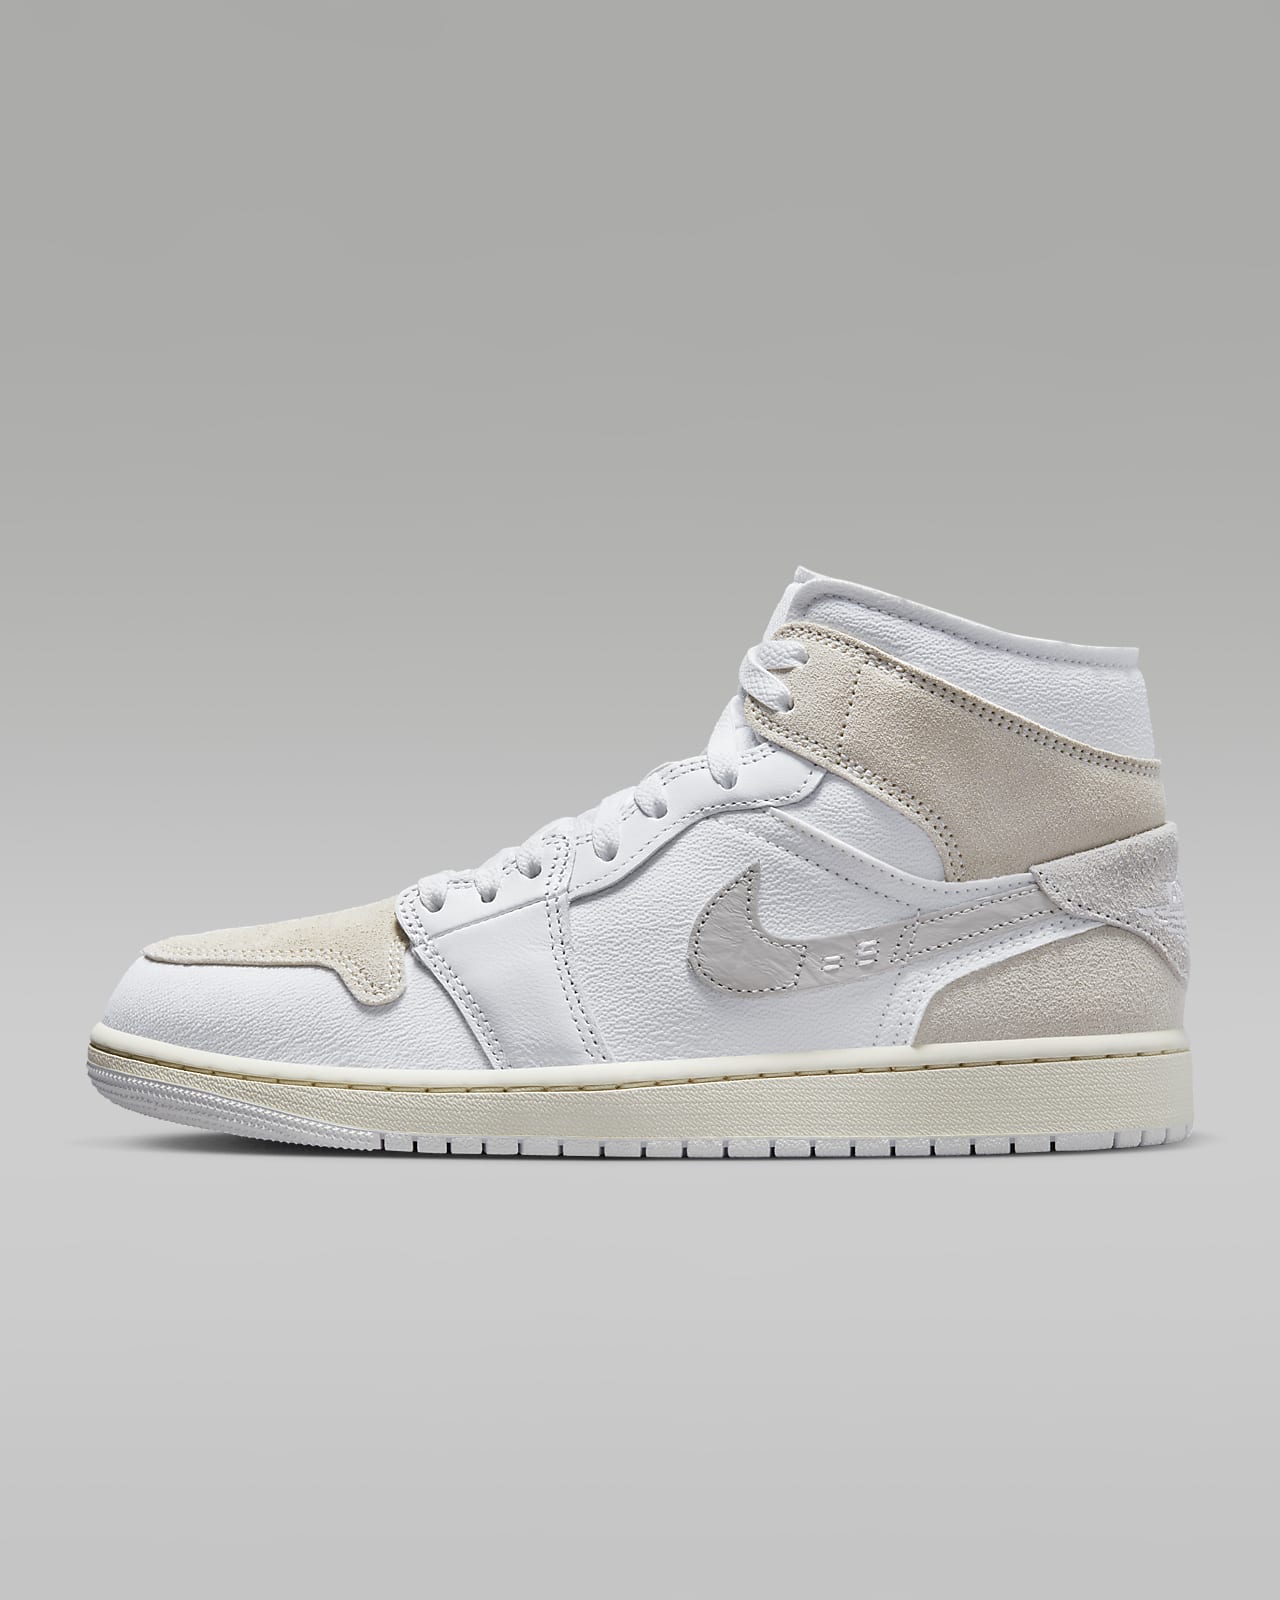 nike Mens Air Jordan 1 Mid Shoes, Cement Grey/White